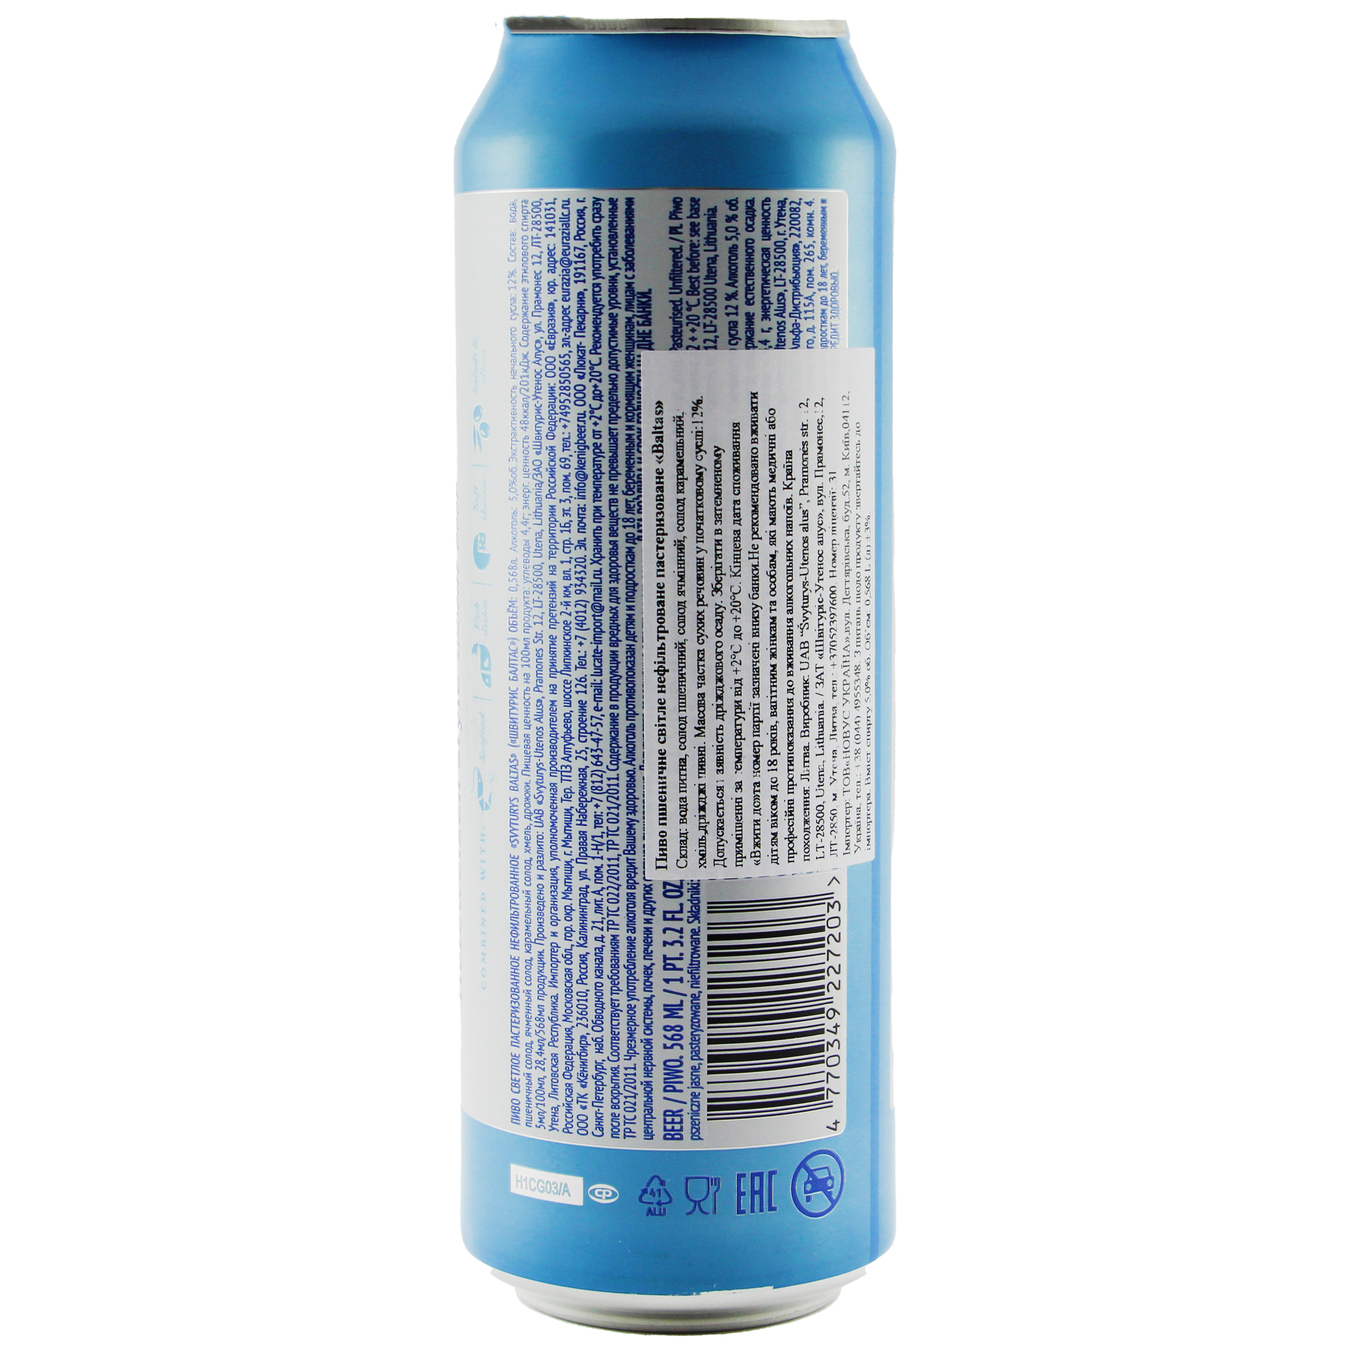 Beer Svyturys Baltas light unfiltered 5% 0,568l 2